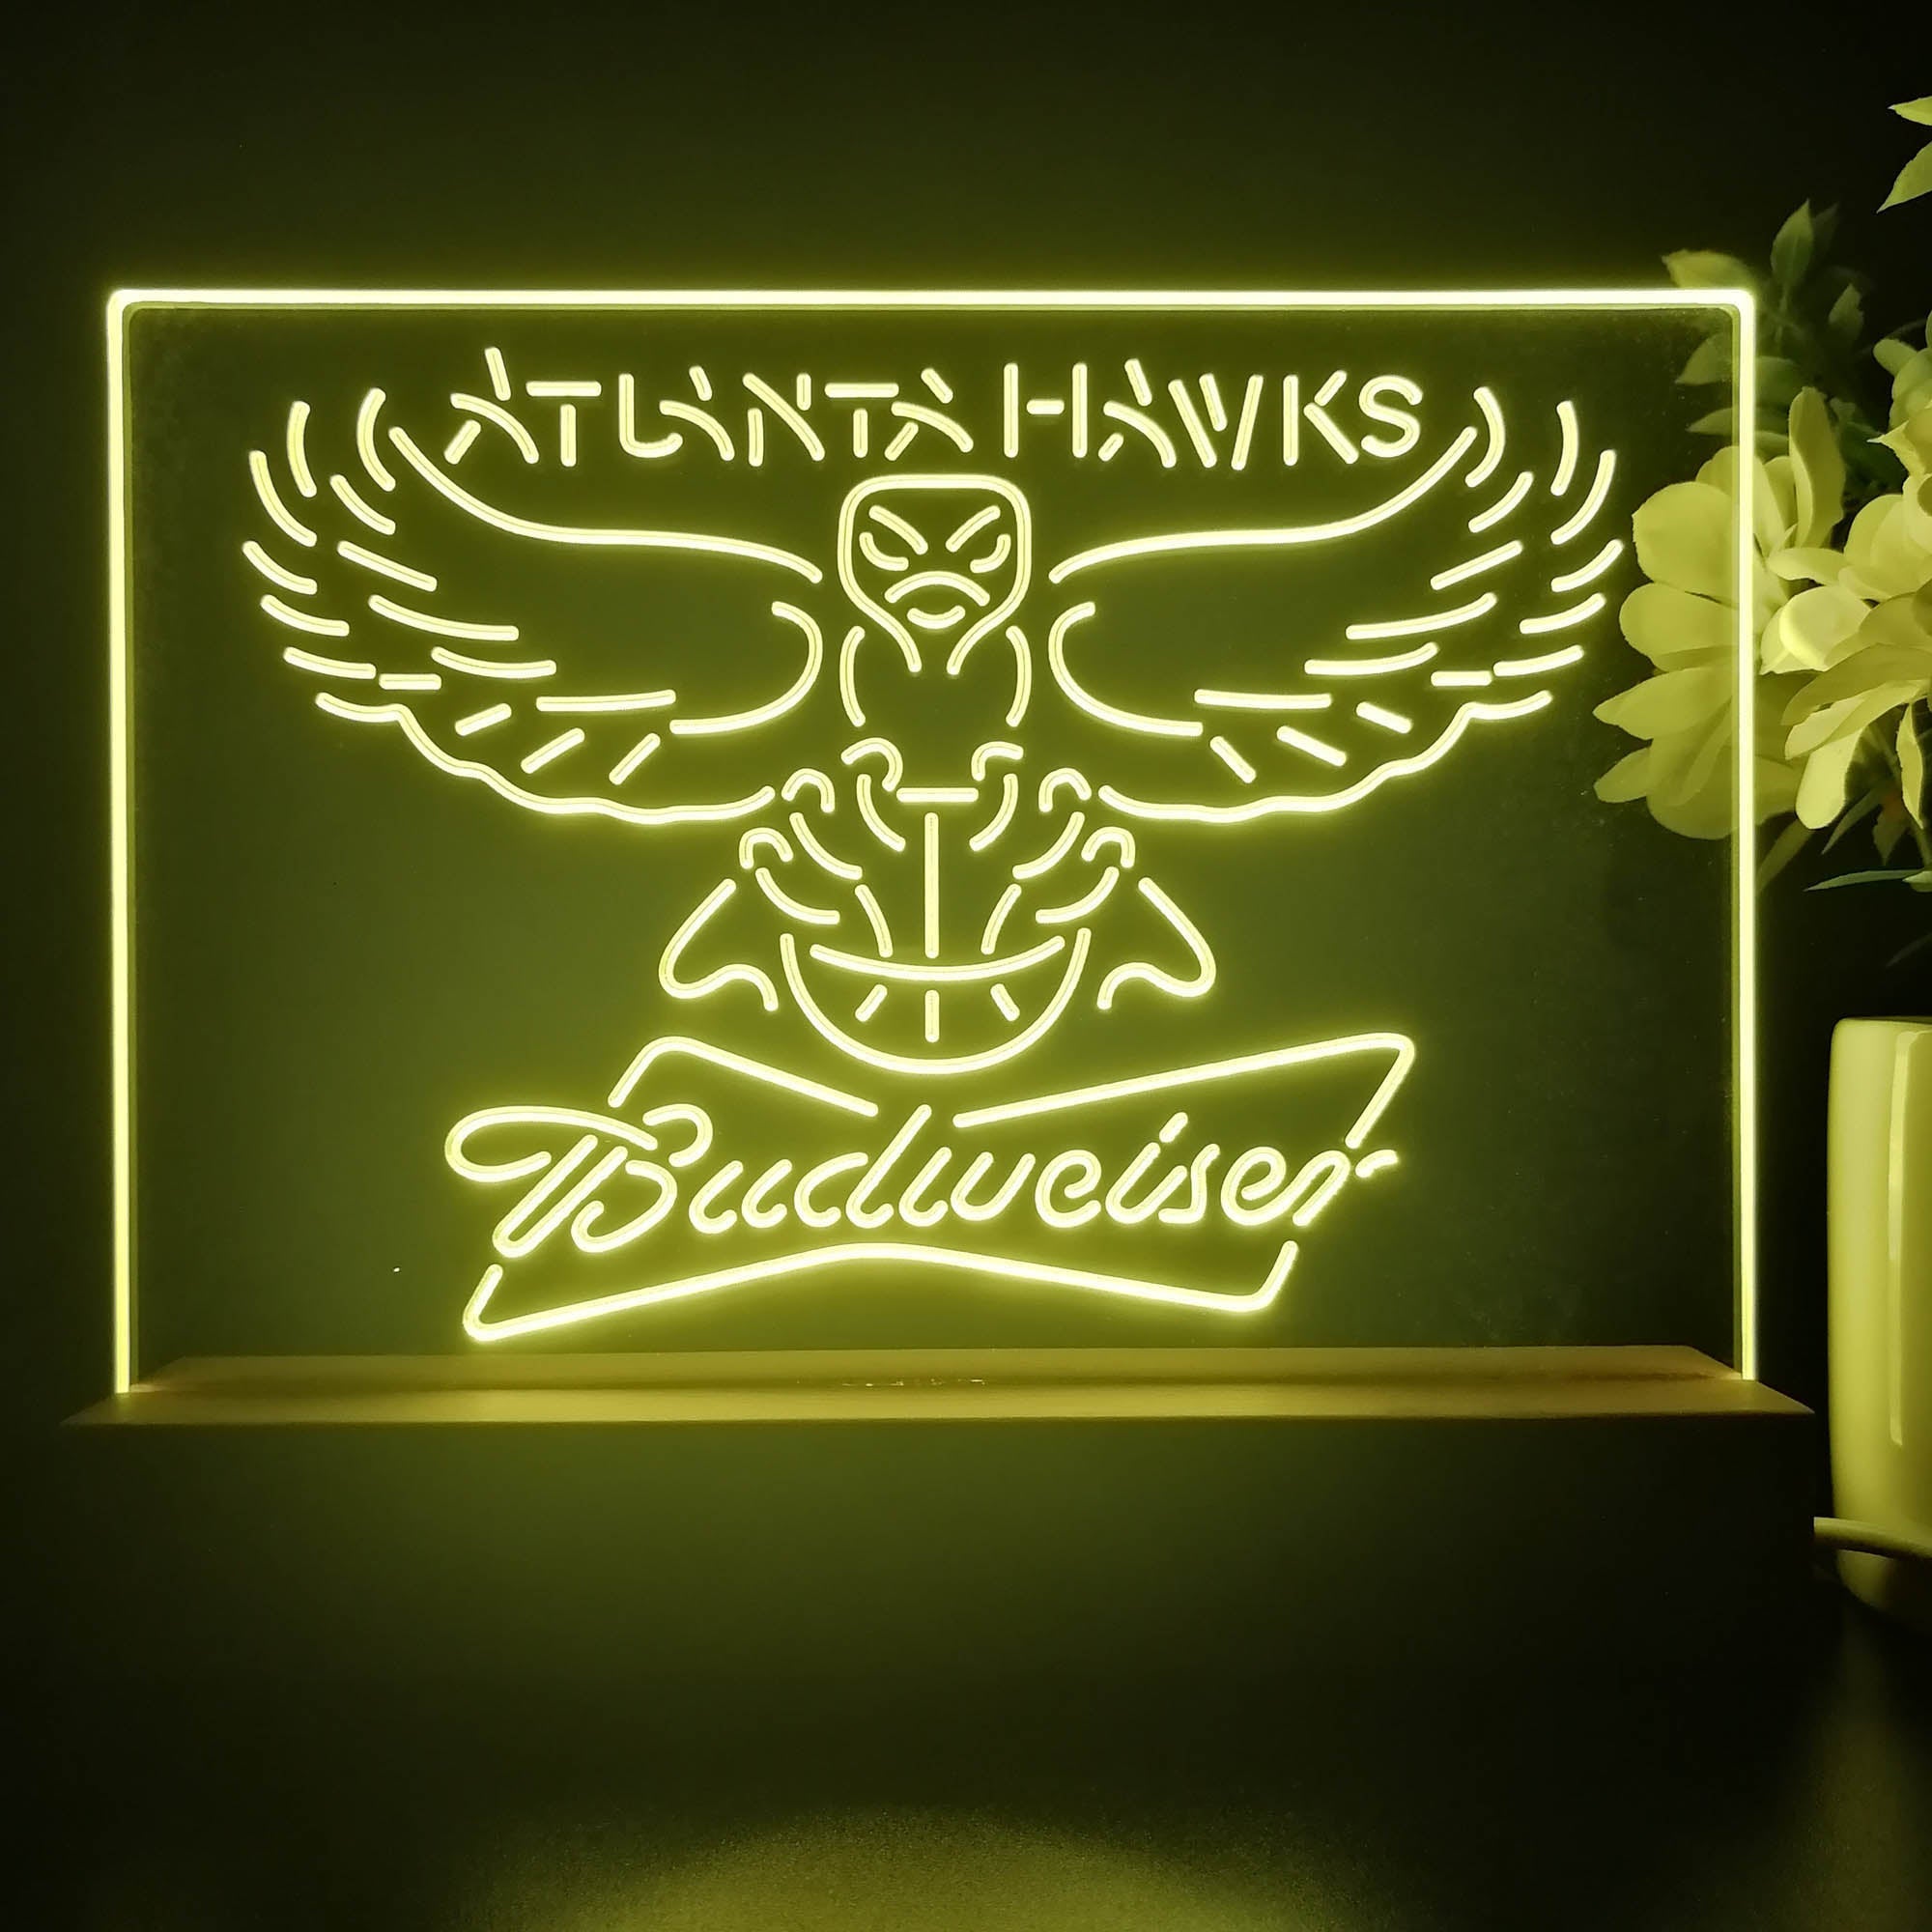 Atlanta Hawks Budweiser Night Light Pub Bar Lamp